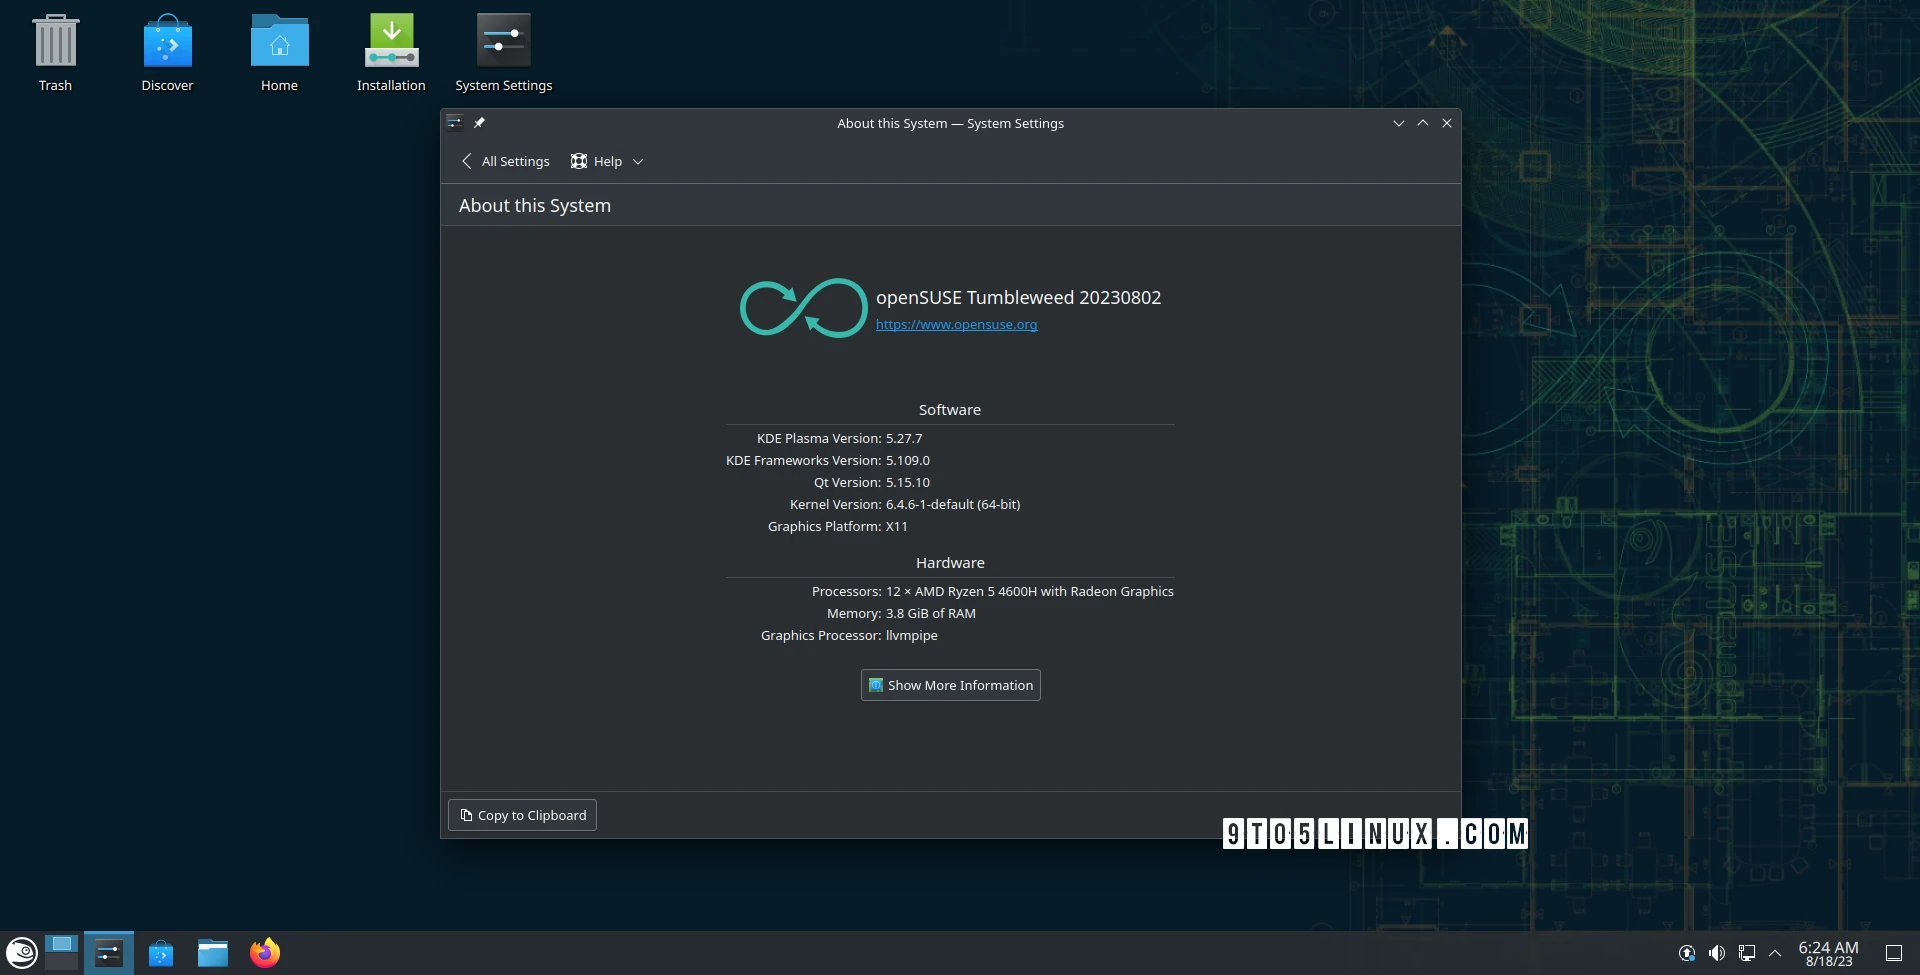 KDE Frameworks 5.109 Improves Detection of GPUs on Dual-GPU Systems